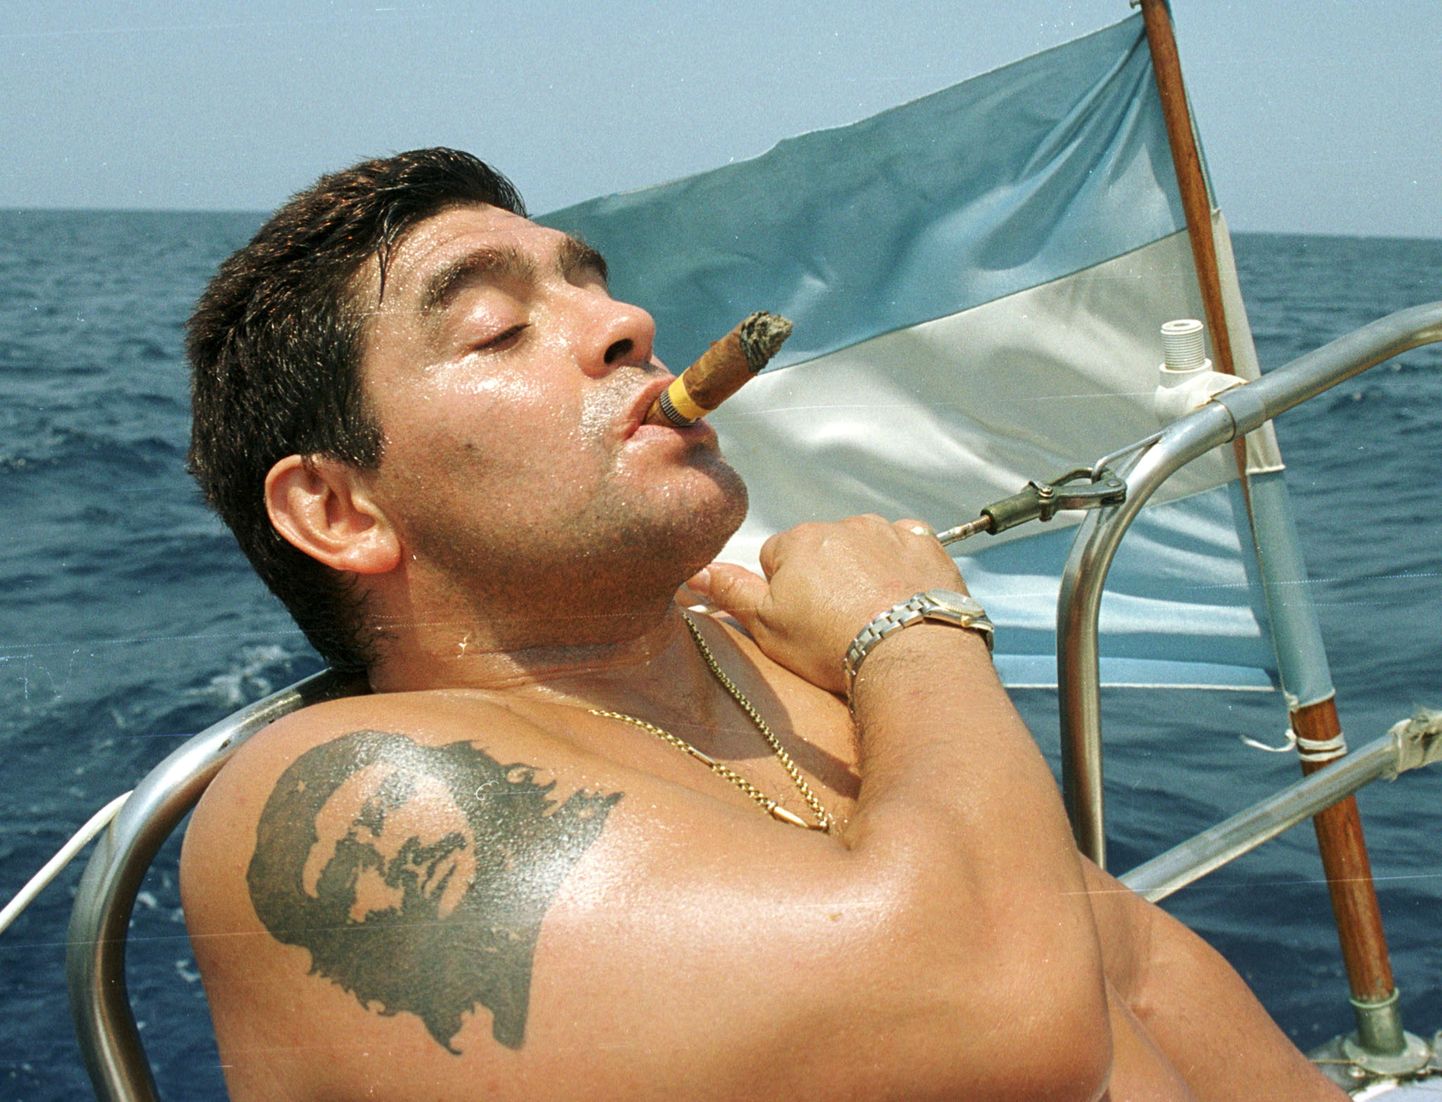 Djego Maradona